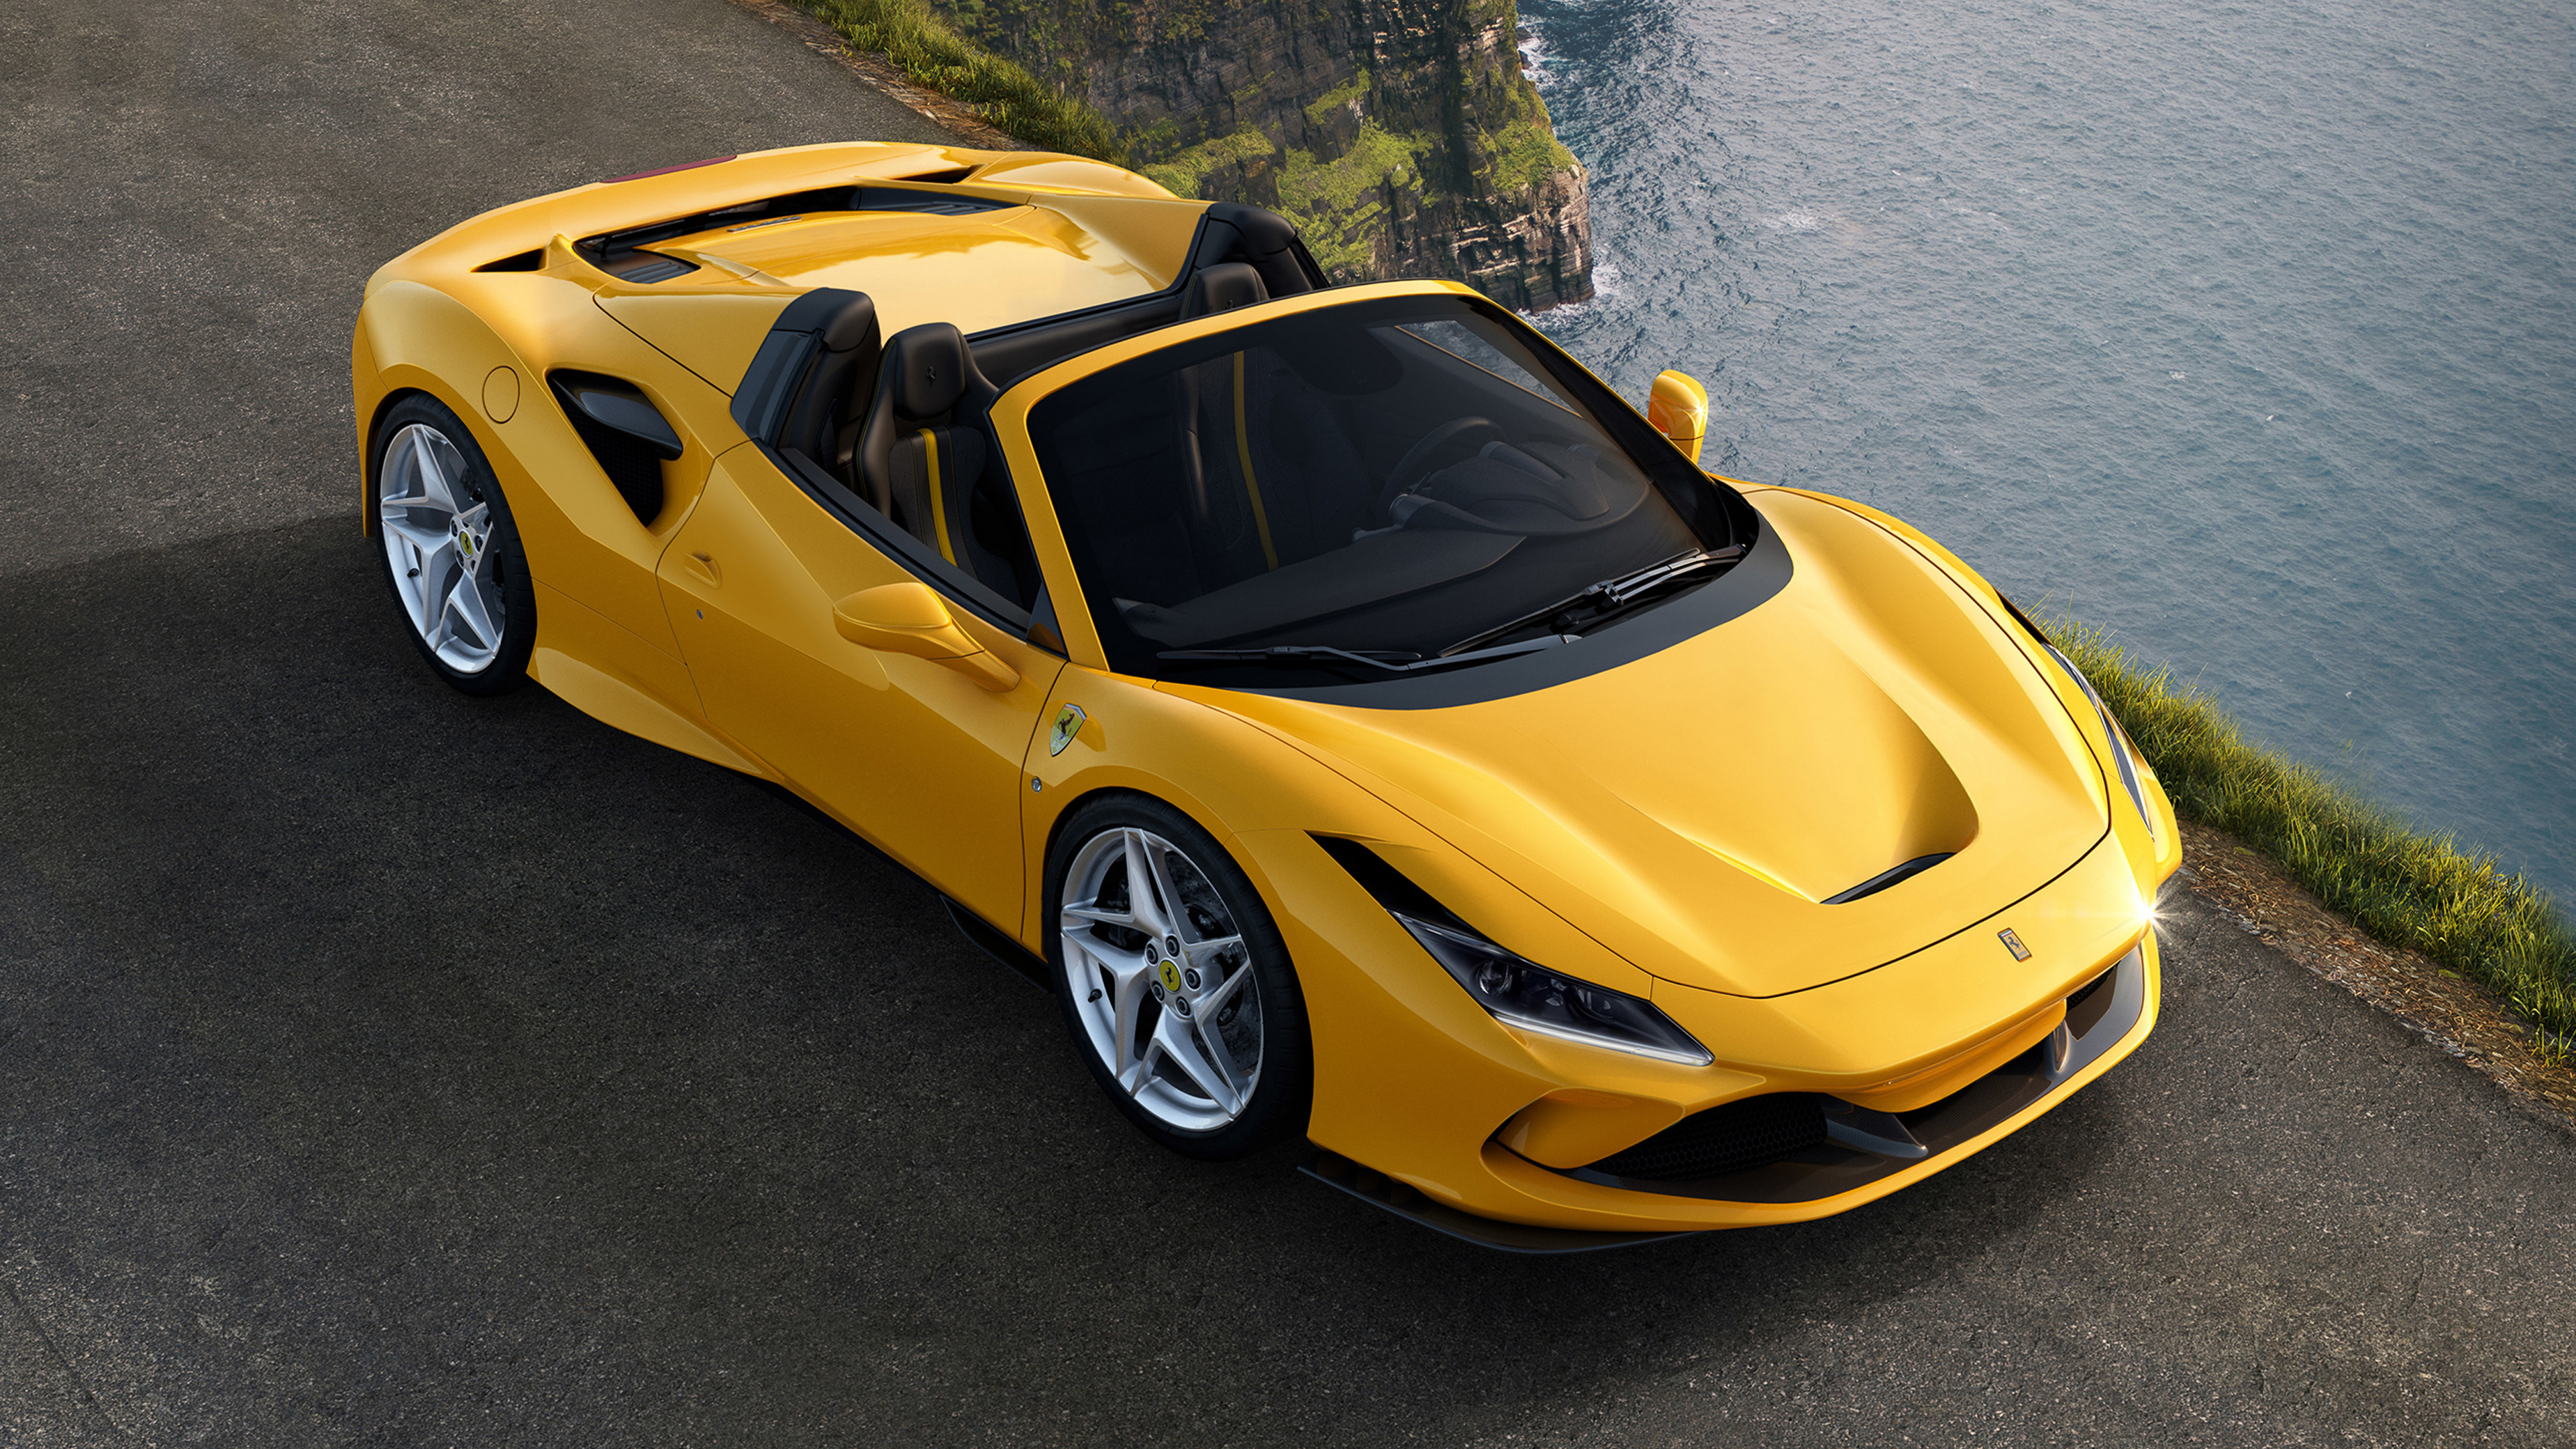 Ferrari F8, Off-road yellow car, 4K wallpaper, HD image, 3840x2160 4K Desktop